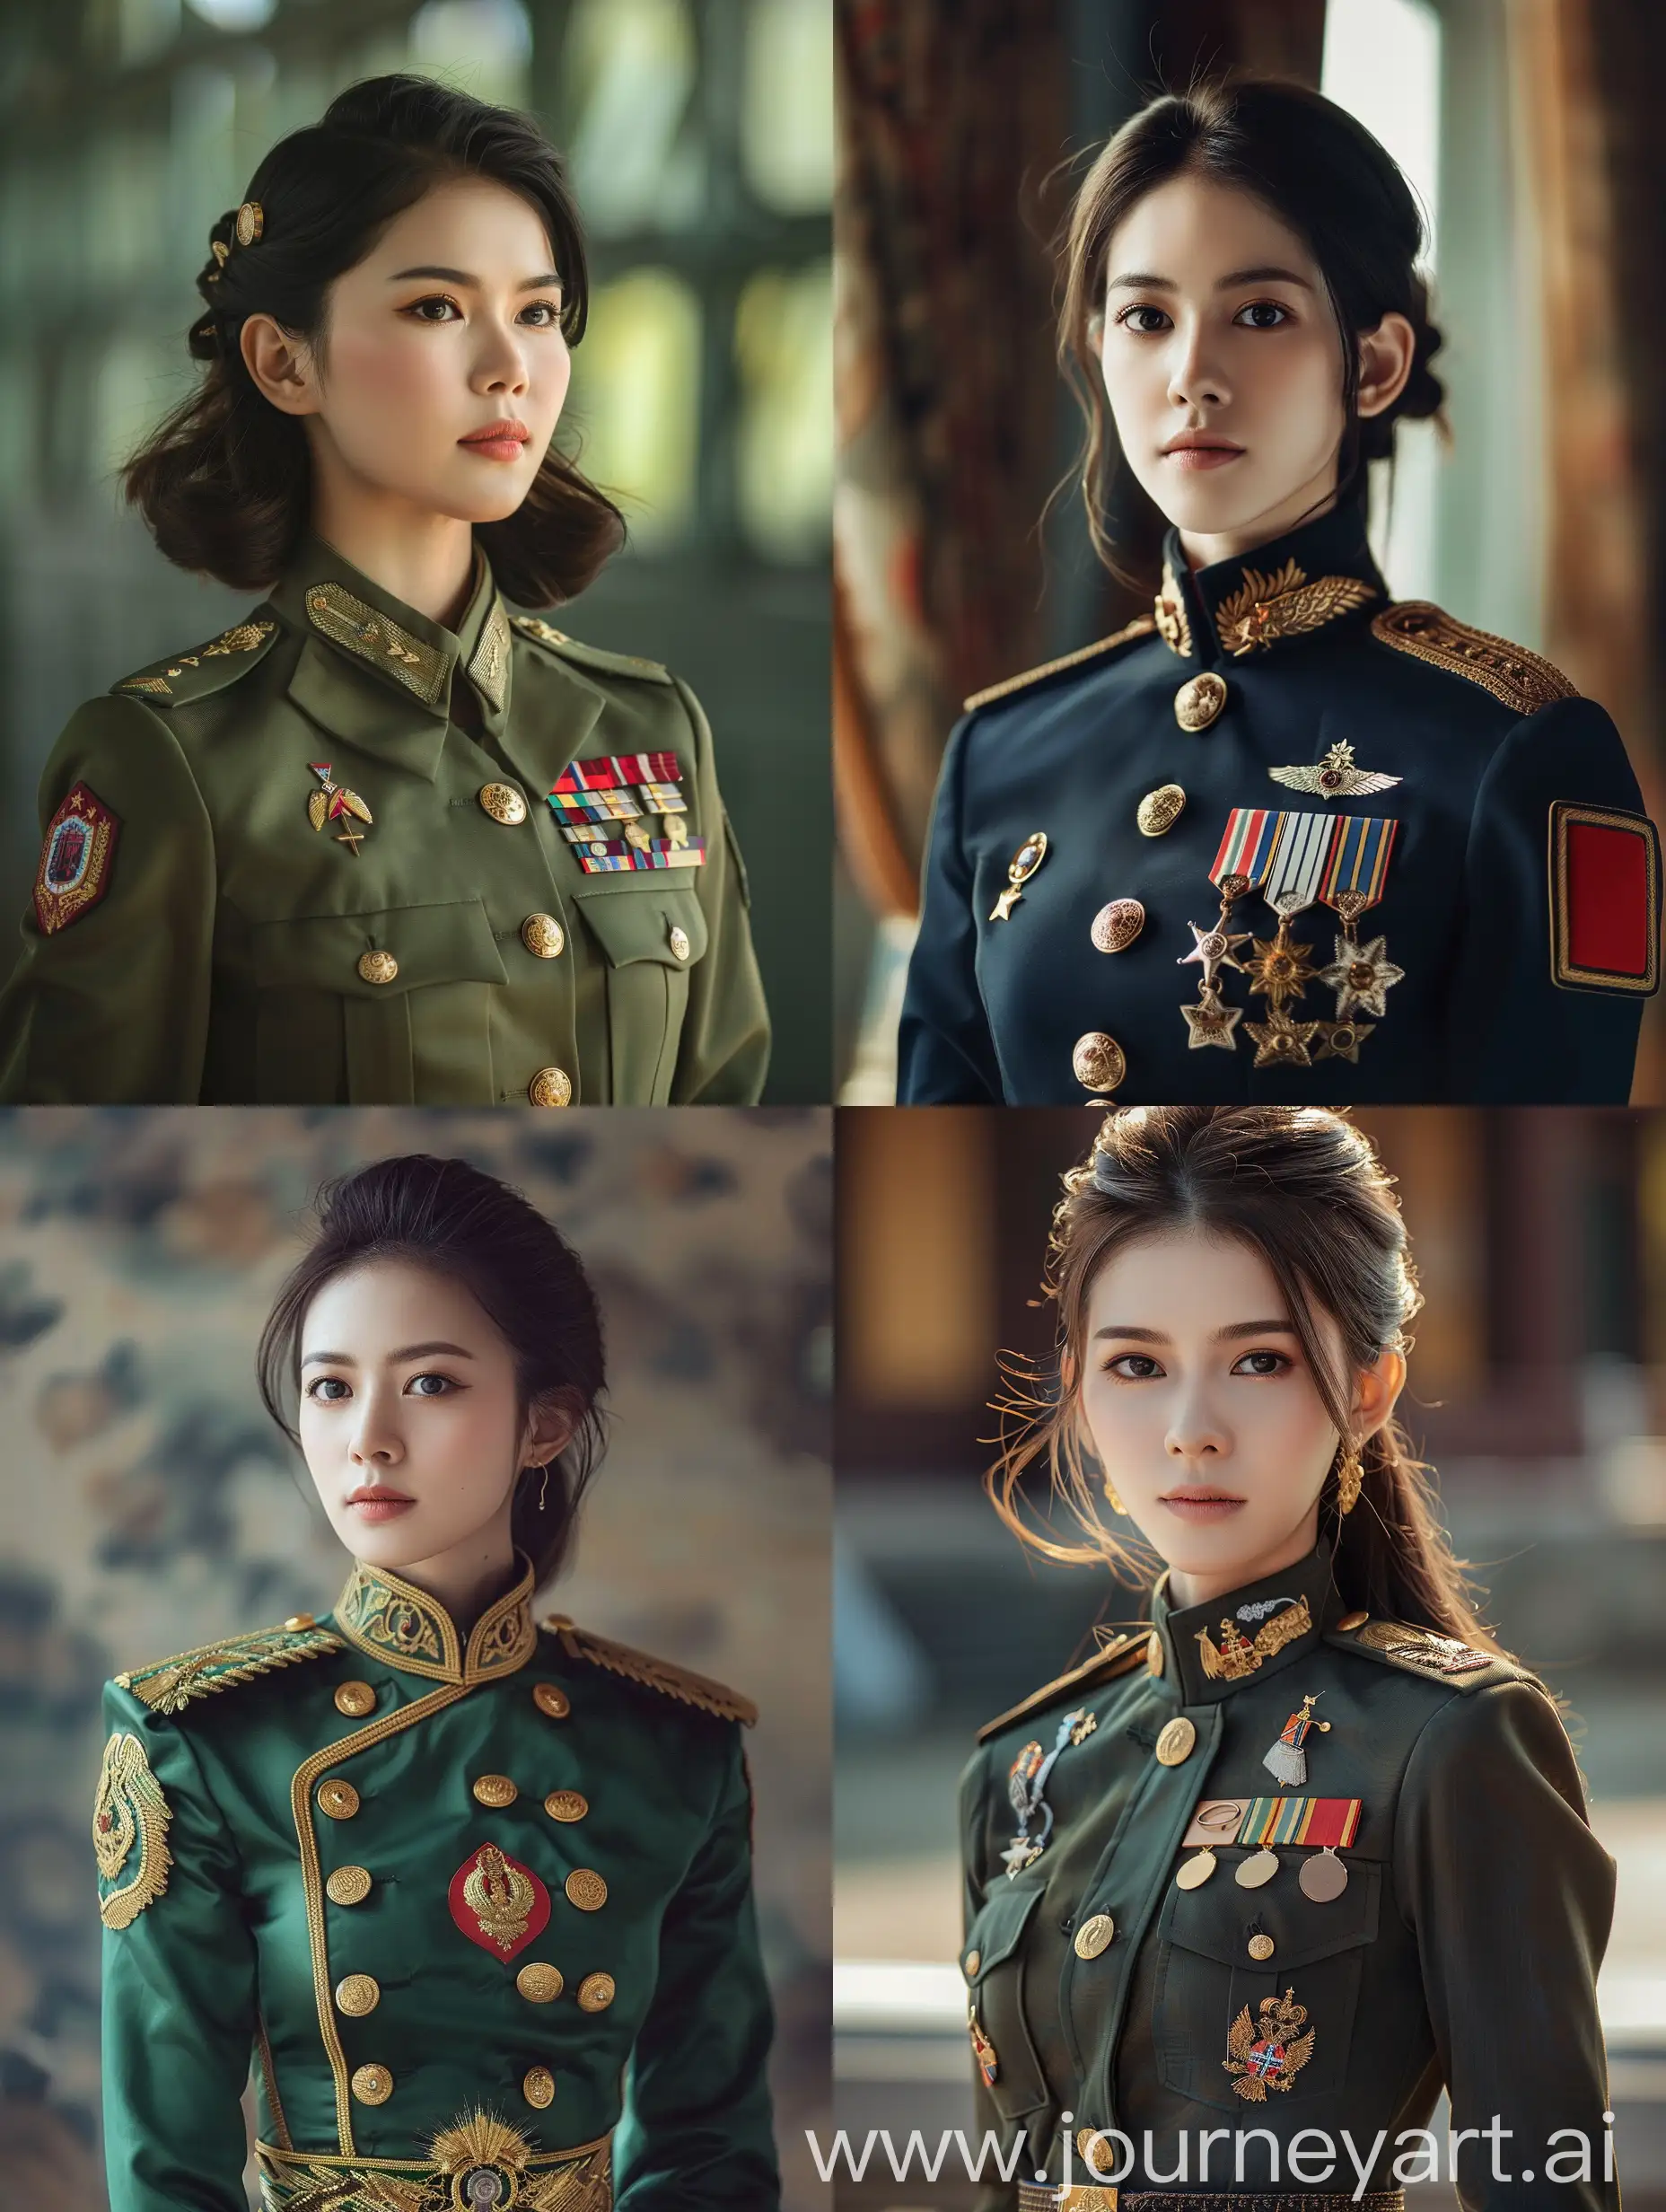 Elegant-Asian-Woman-in-Renaissance-Military-Attire